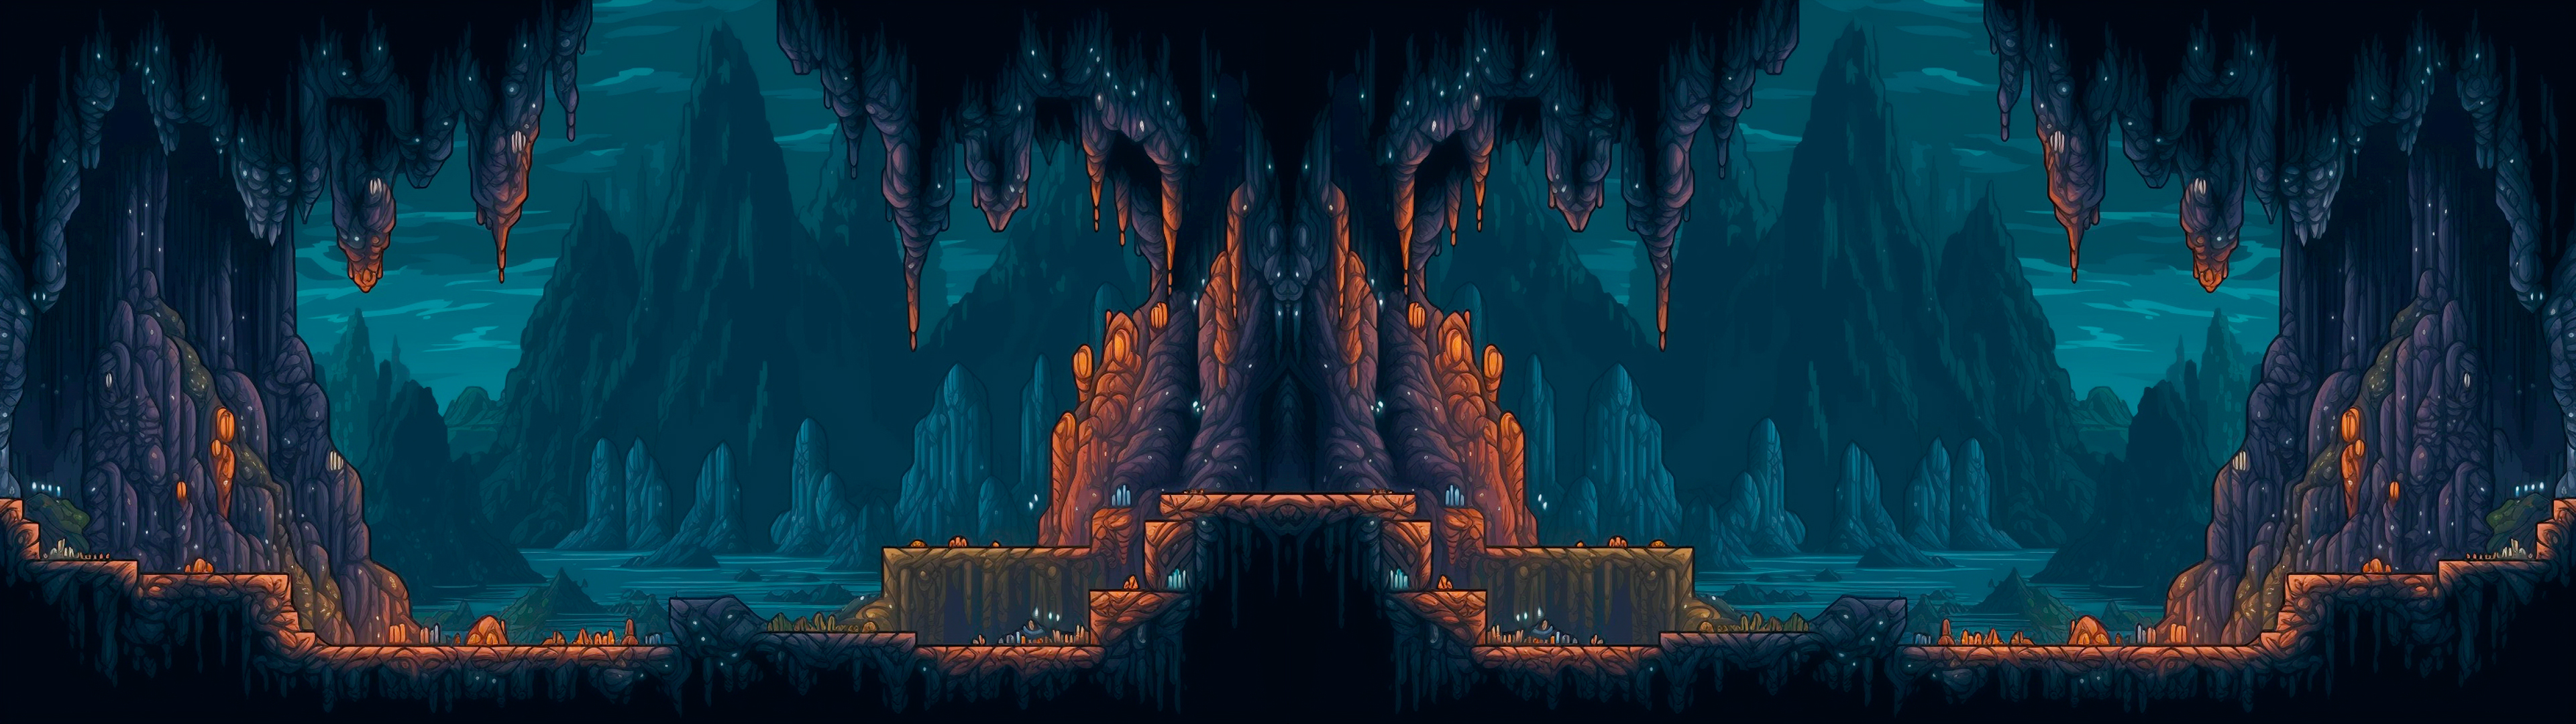 Dark Caverns Pixel Art Tiled Background